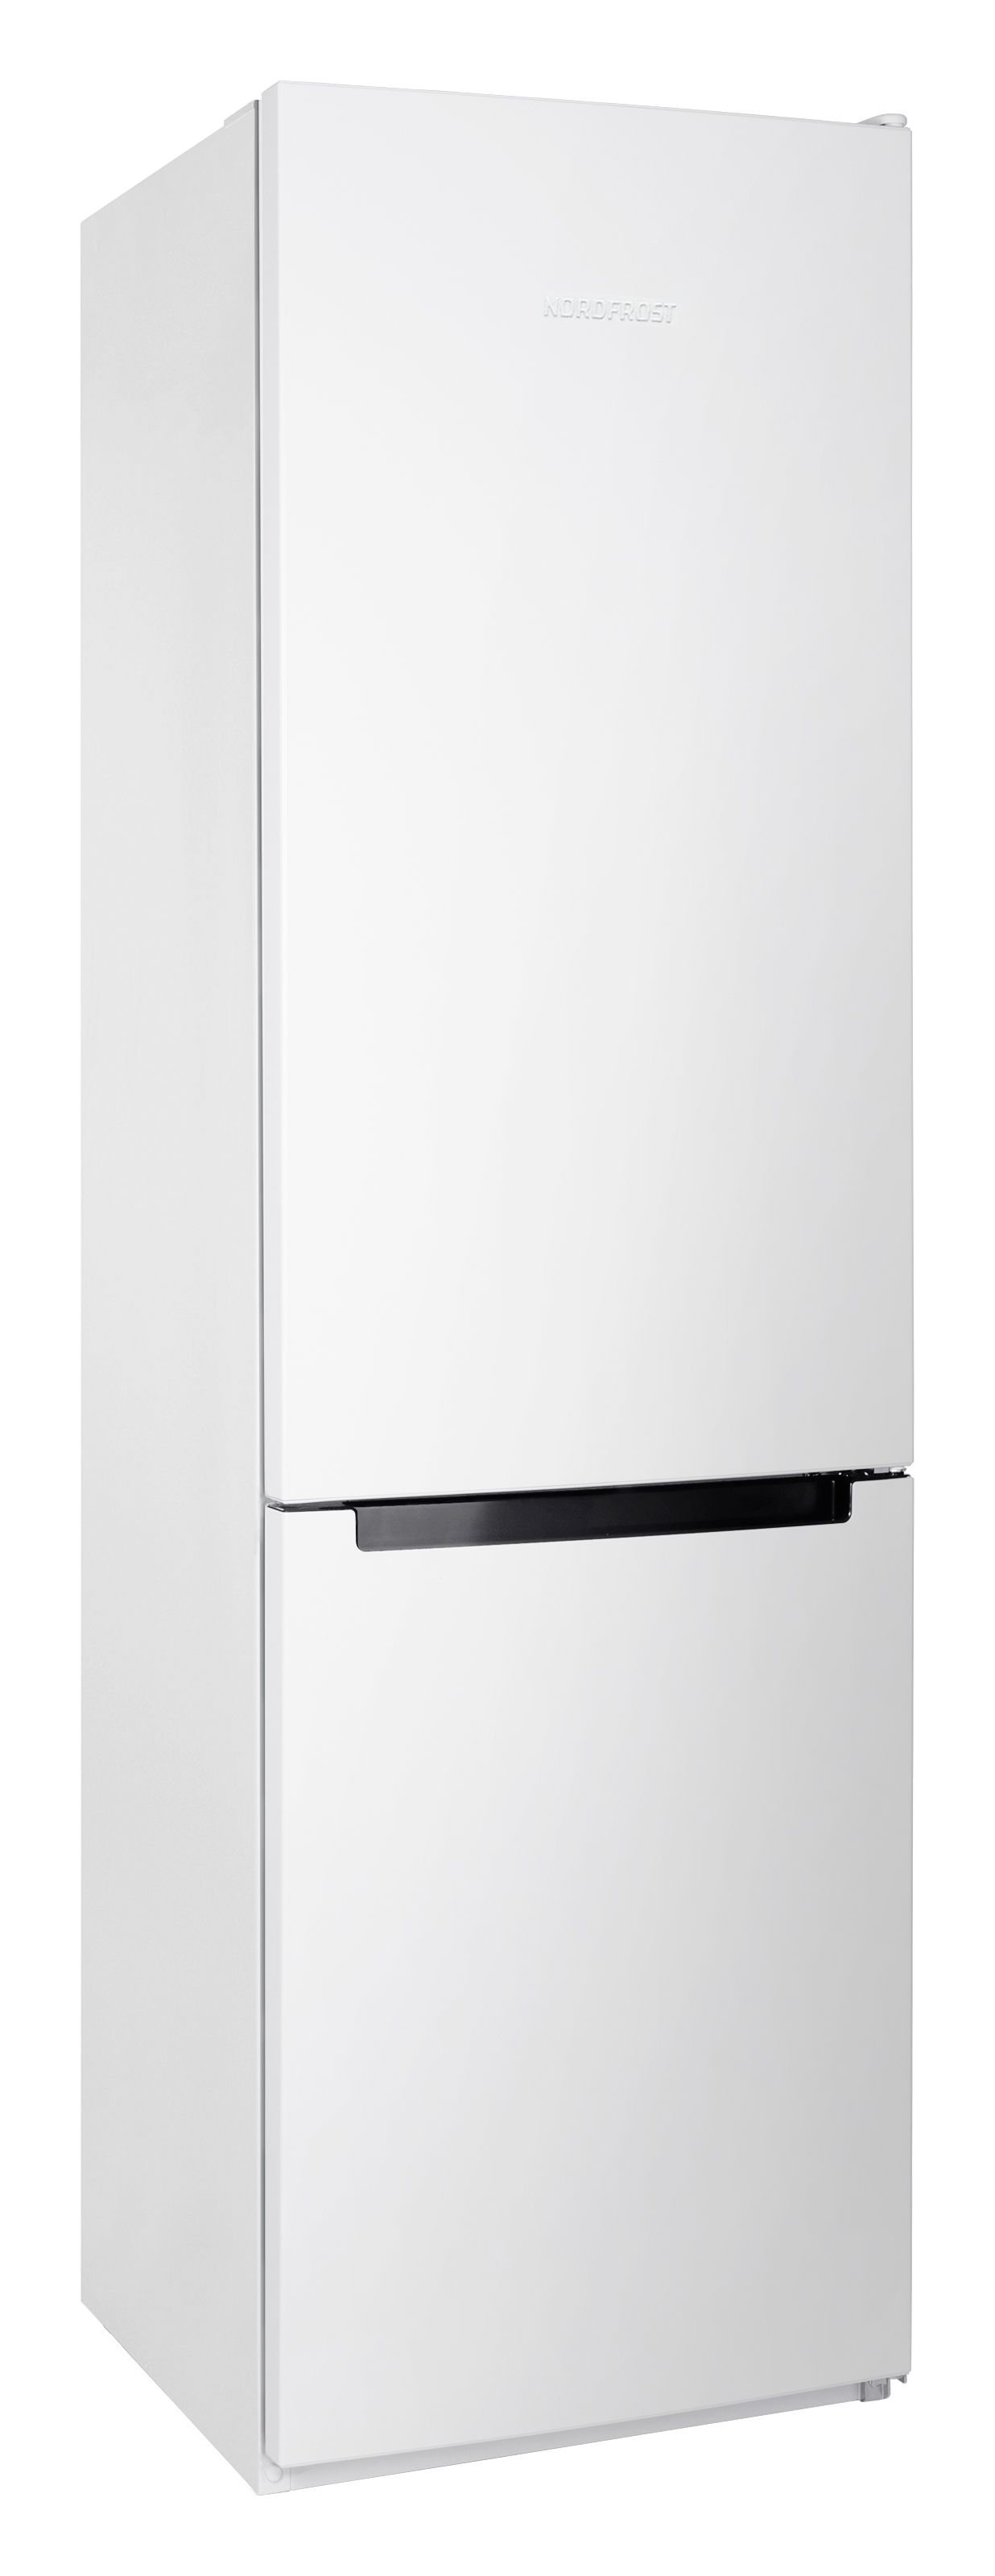 Холодильник NordFrost NRB 154 W белый двухкамерный холодильник nordfrost nrb 152 932